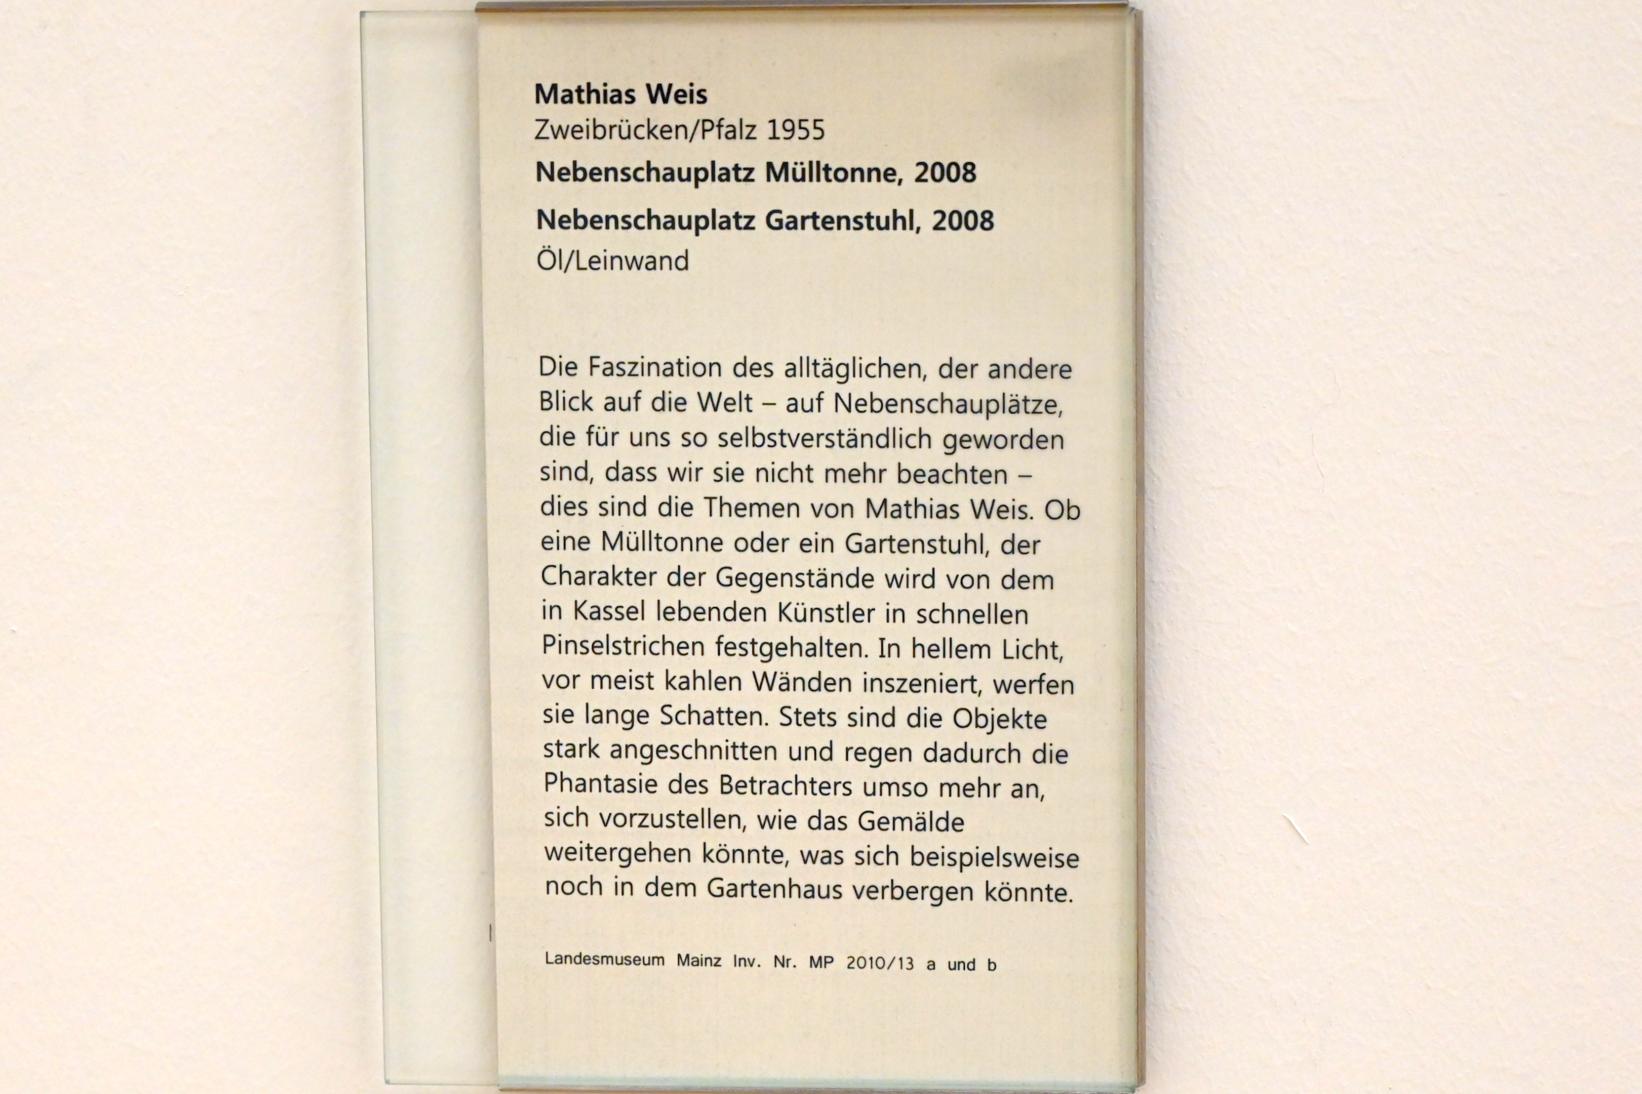 Mathias Weis (2008), Nebenschauplatz Gartenstuhl, Mainz, Landesmuseum, Moderne, Saal 6, 2008, Bild 2/2